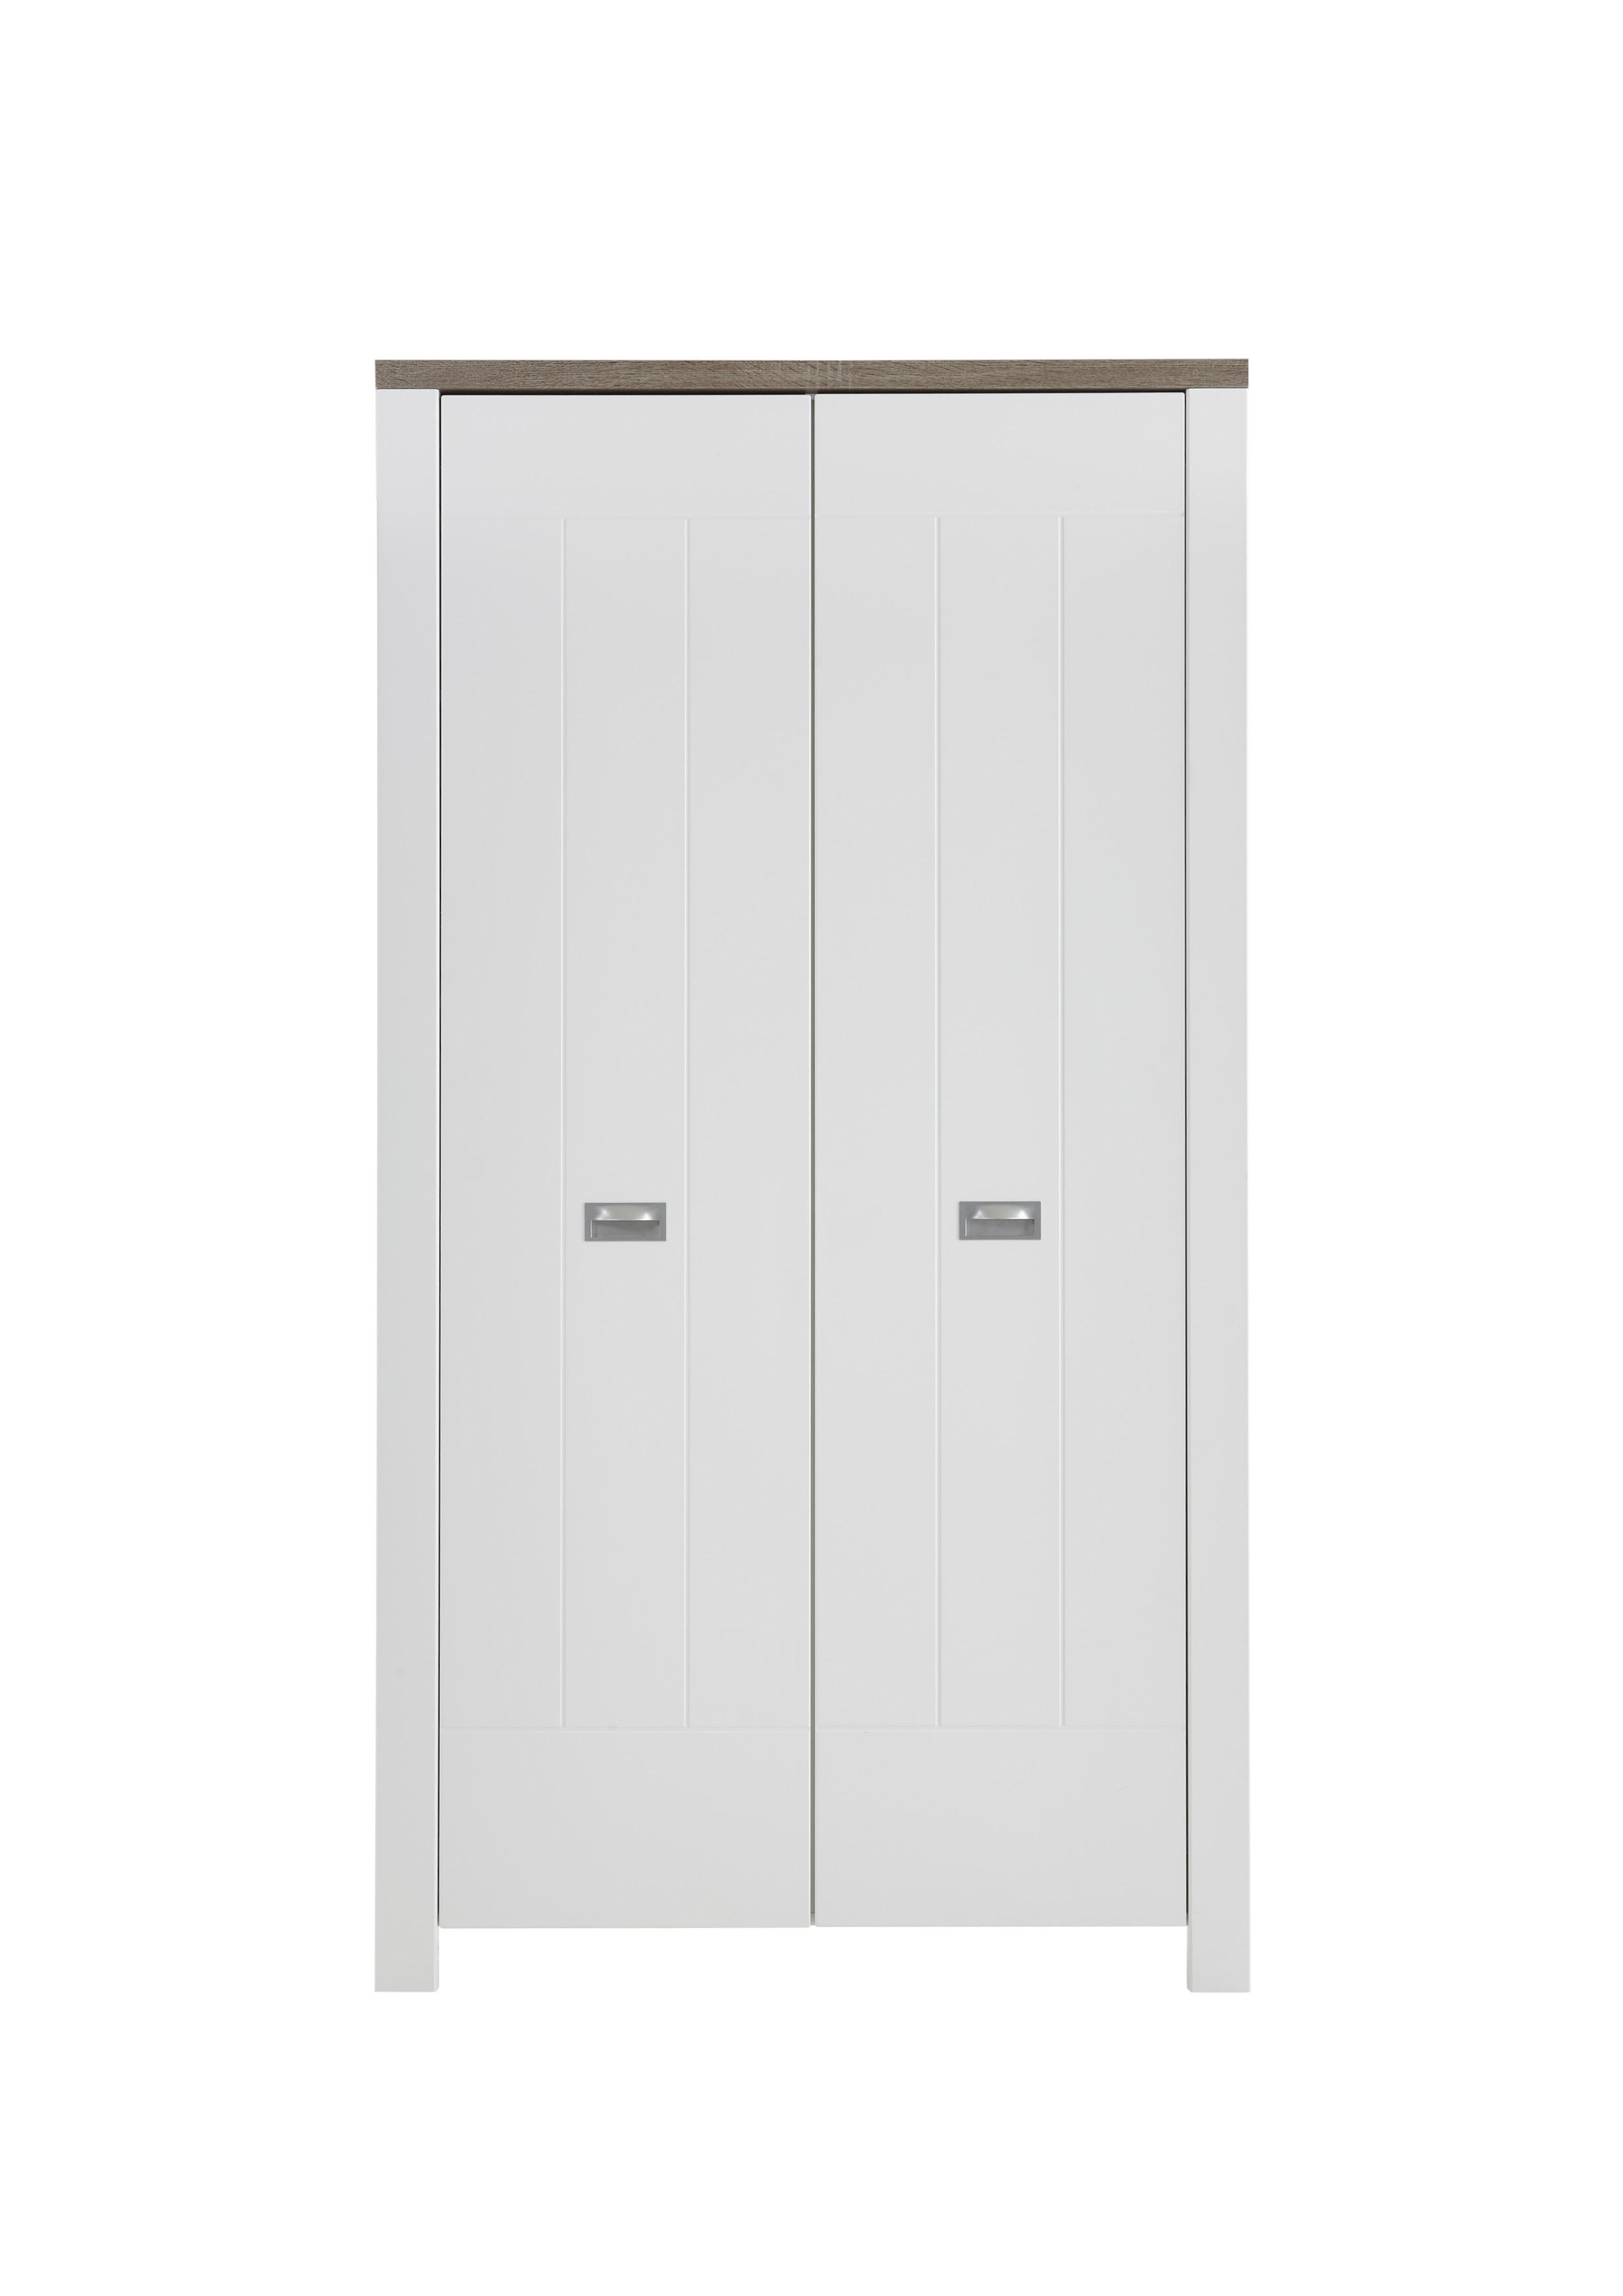 GARDEROB 112/210/57 cm 2-dörrar - vit/färg tryffelek, Lifestyle, metall/träbaserade material (112/210/57cm) - Carryhome